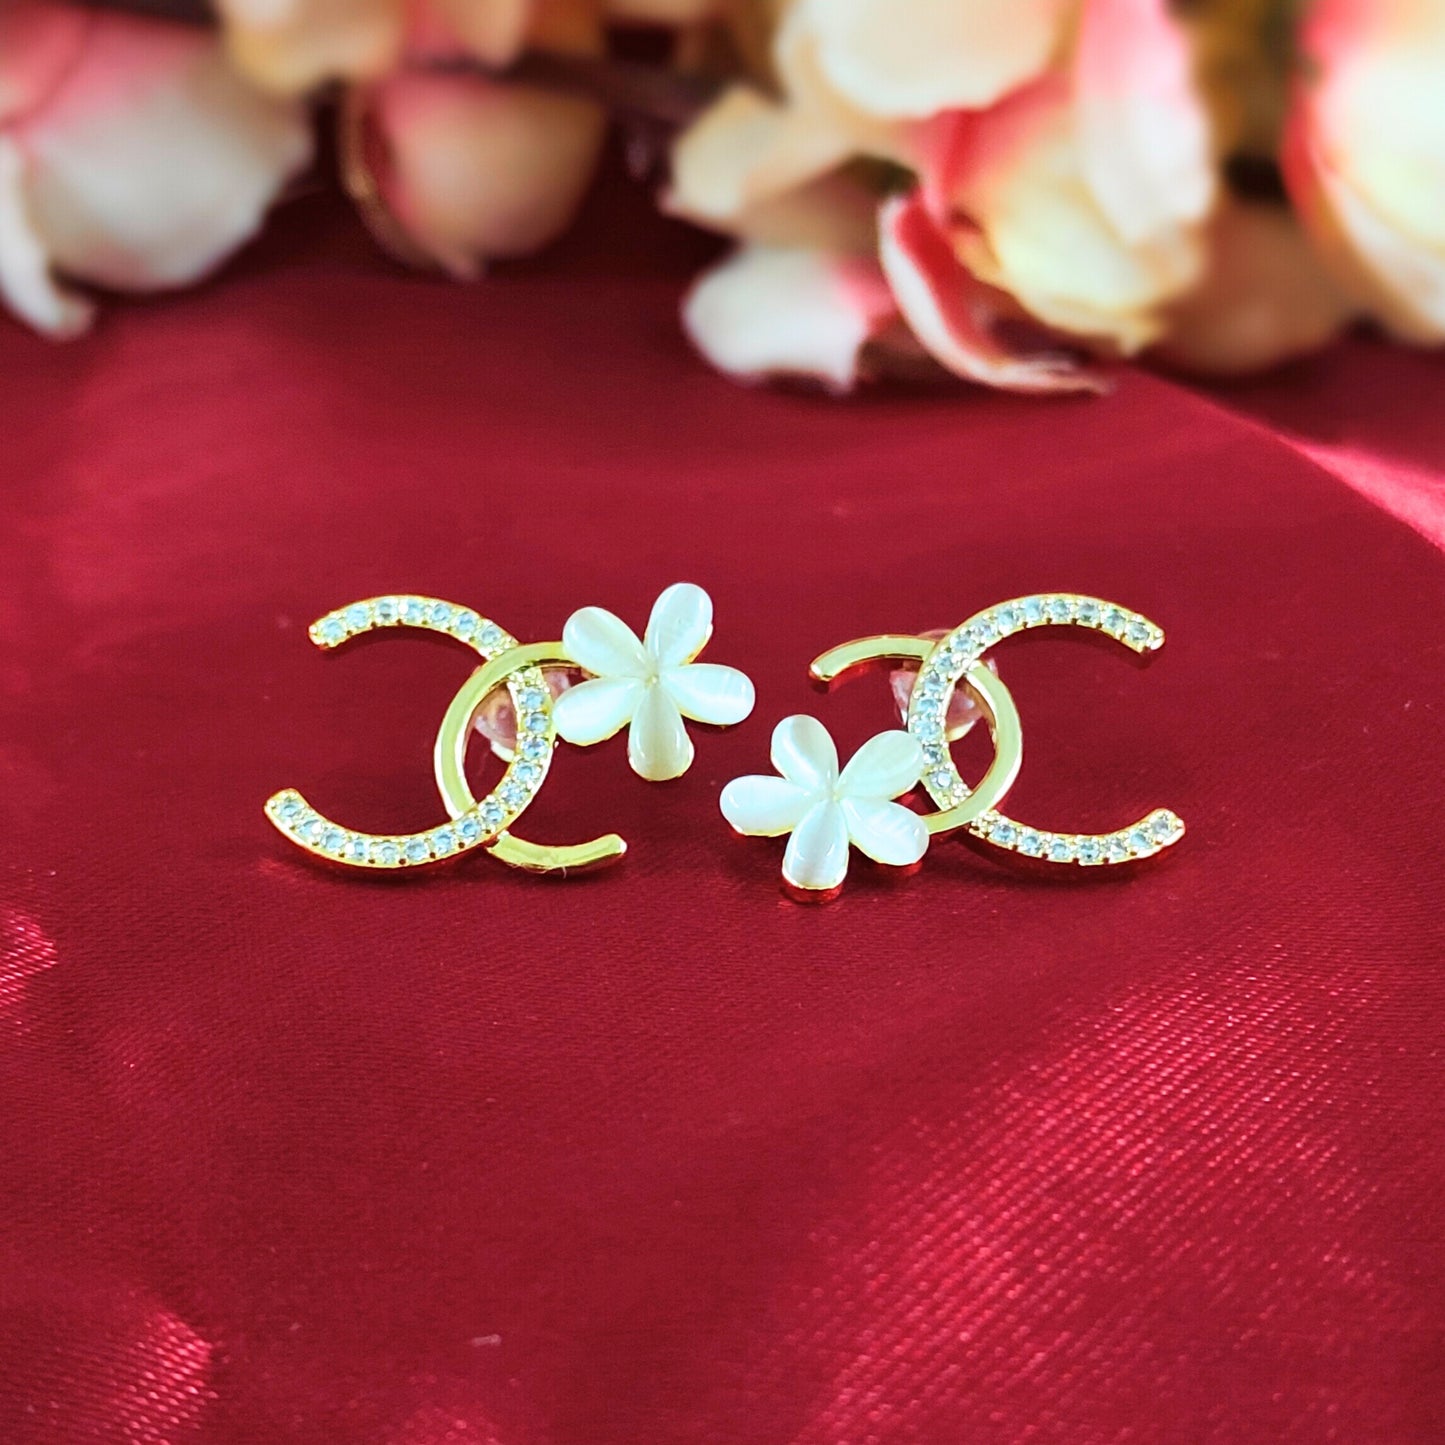 Bdiva 18k Gold Plated Floral Design Stud Earrings